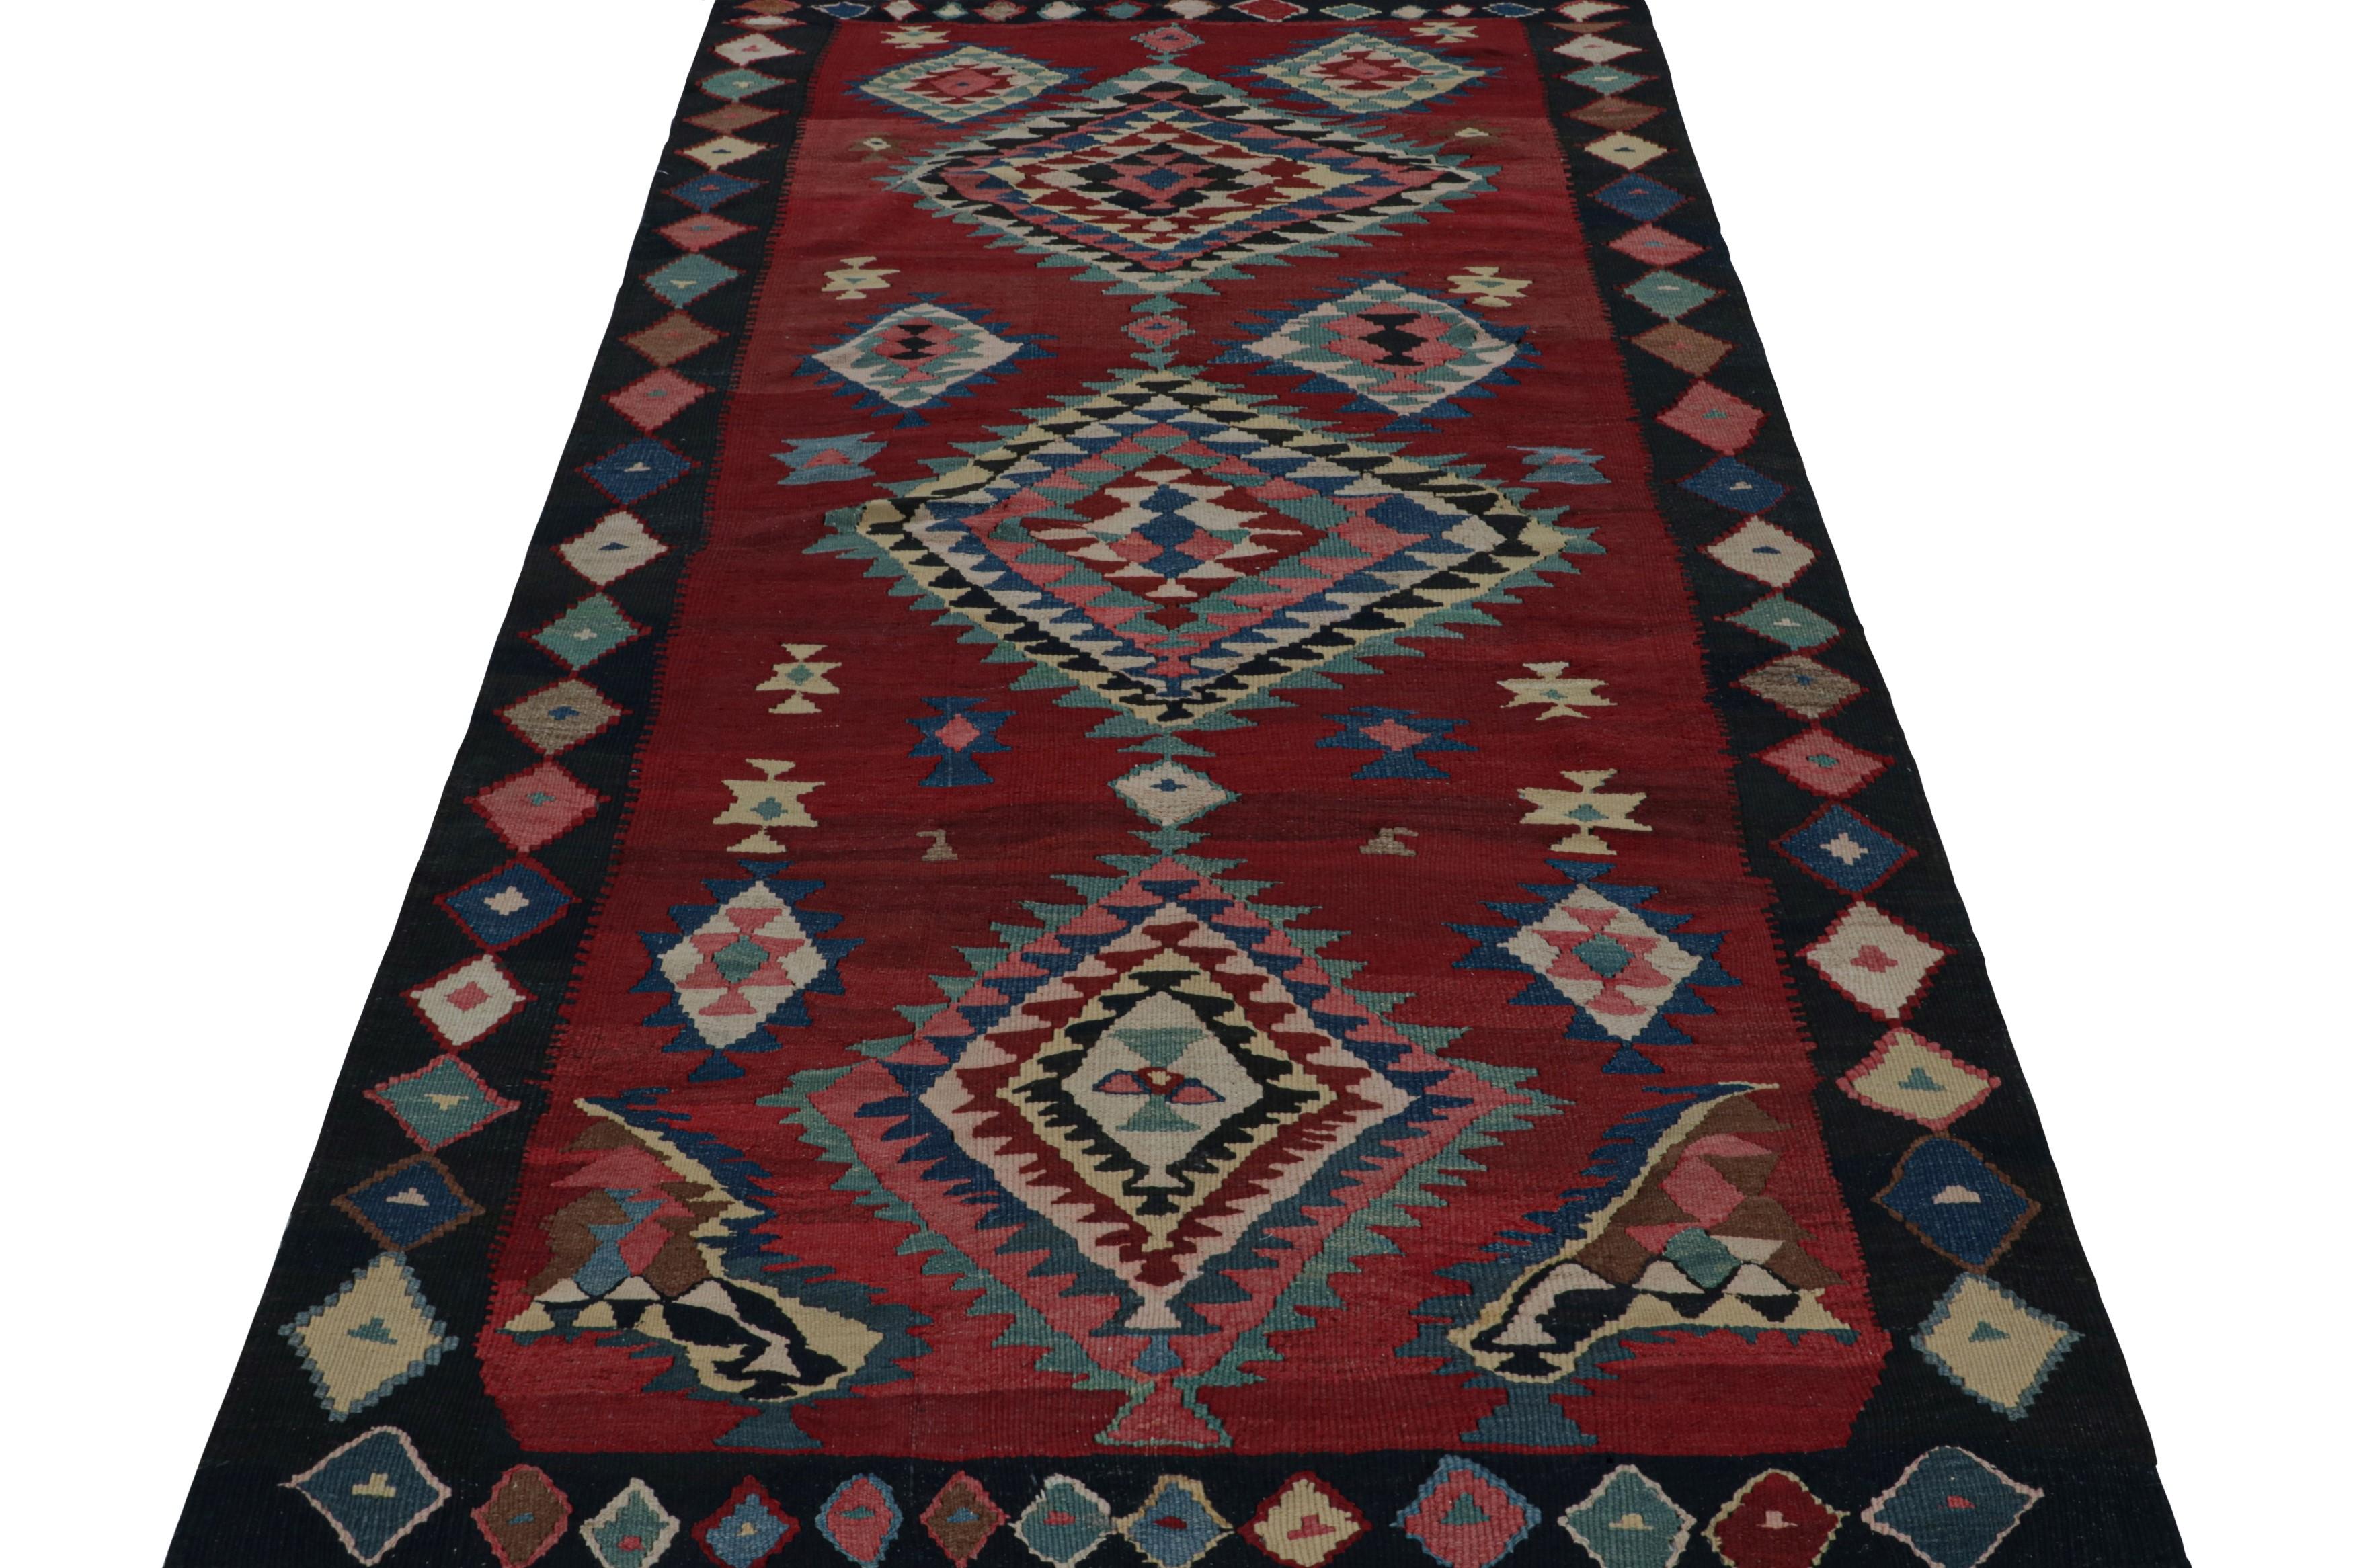 Tribal Vintage tribal Afghan Kilim rug, with Geometric Patterns, from Rug & Kilim For Sale